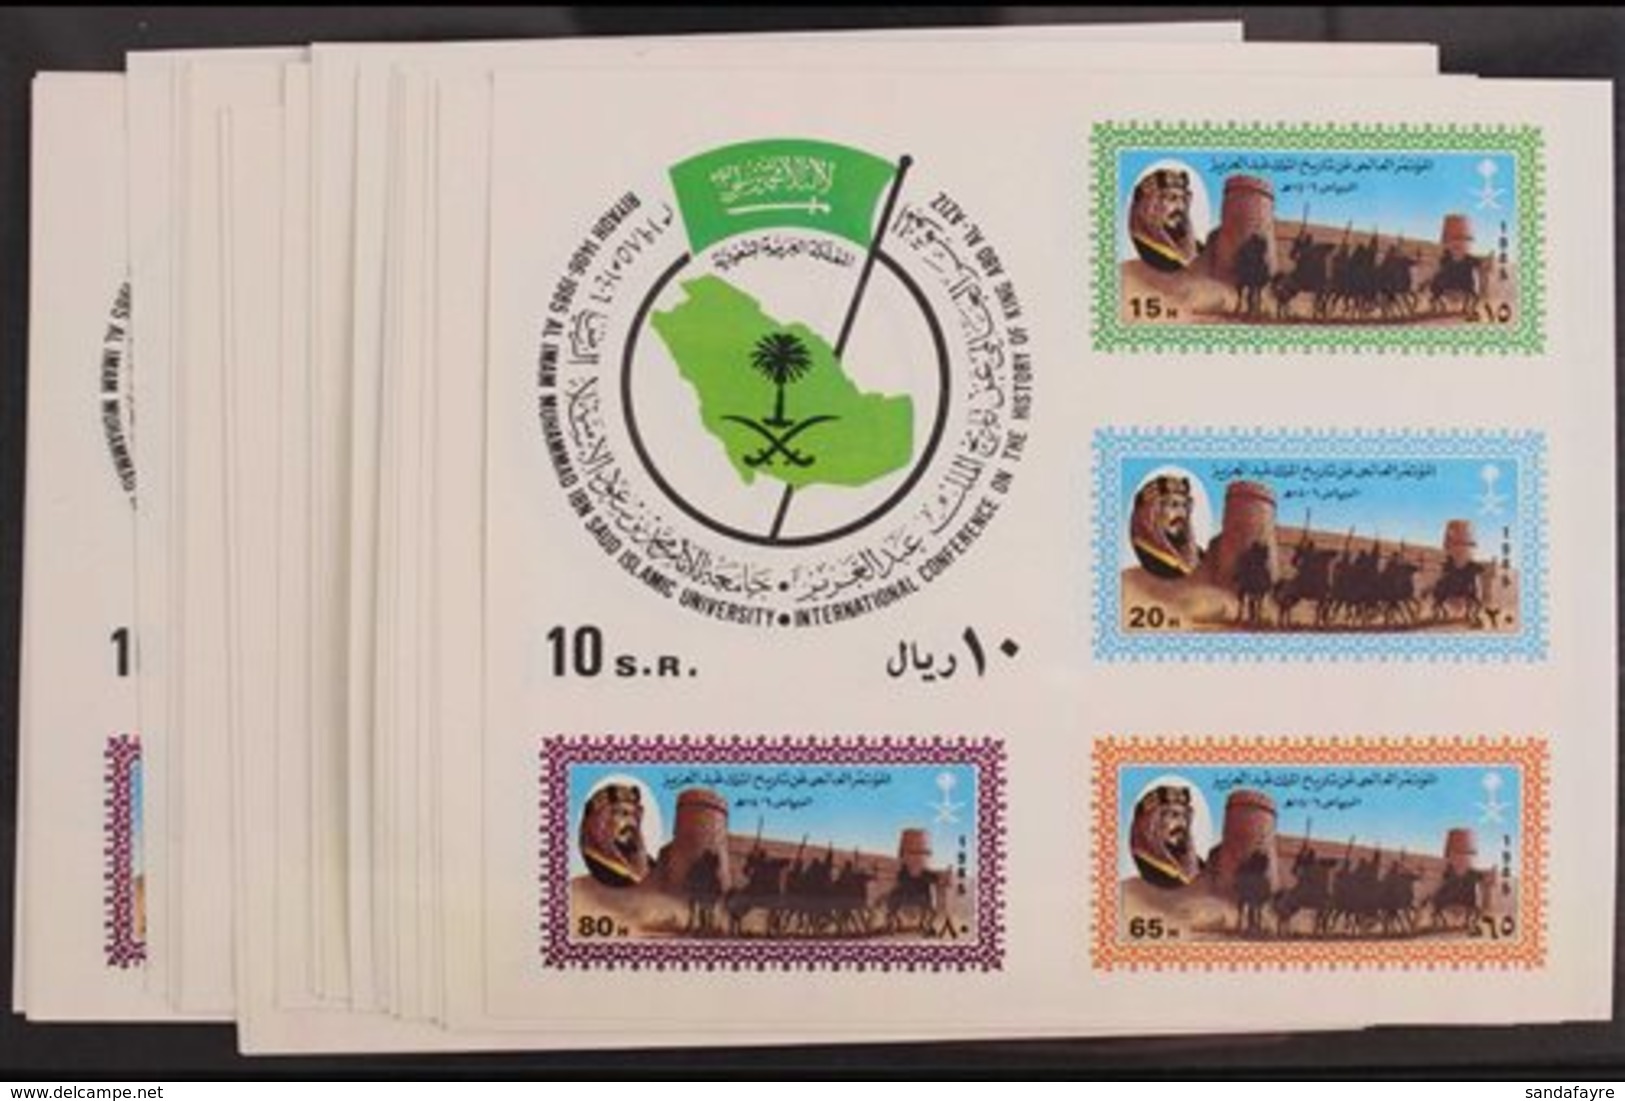 1985 International Conference On King Abdulaziz Miniature Sheets, SG MS1429, Superb Never Hinged Mint Hoard Of Twenty Fi - Arabie Saoudite